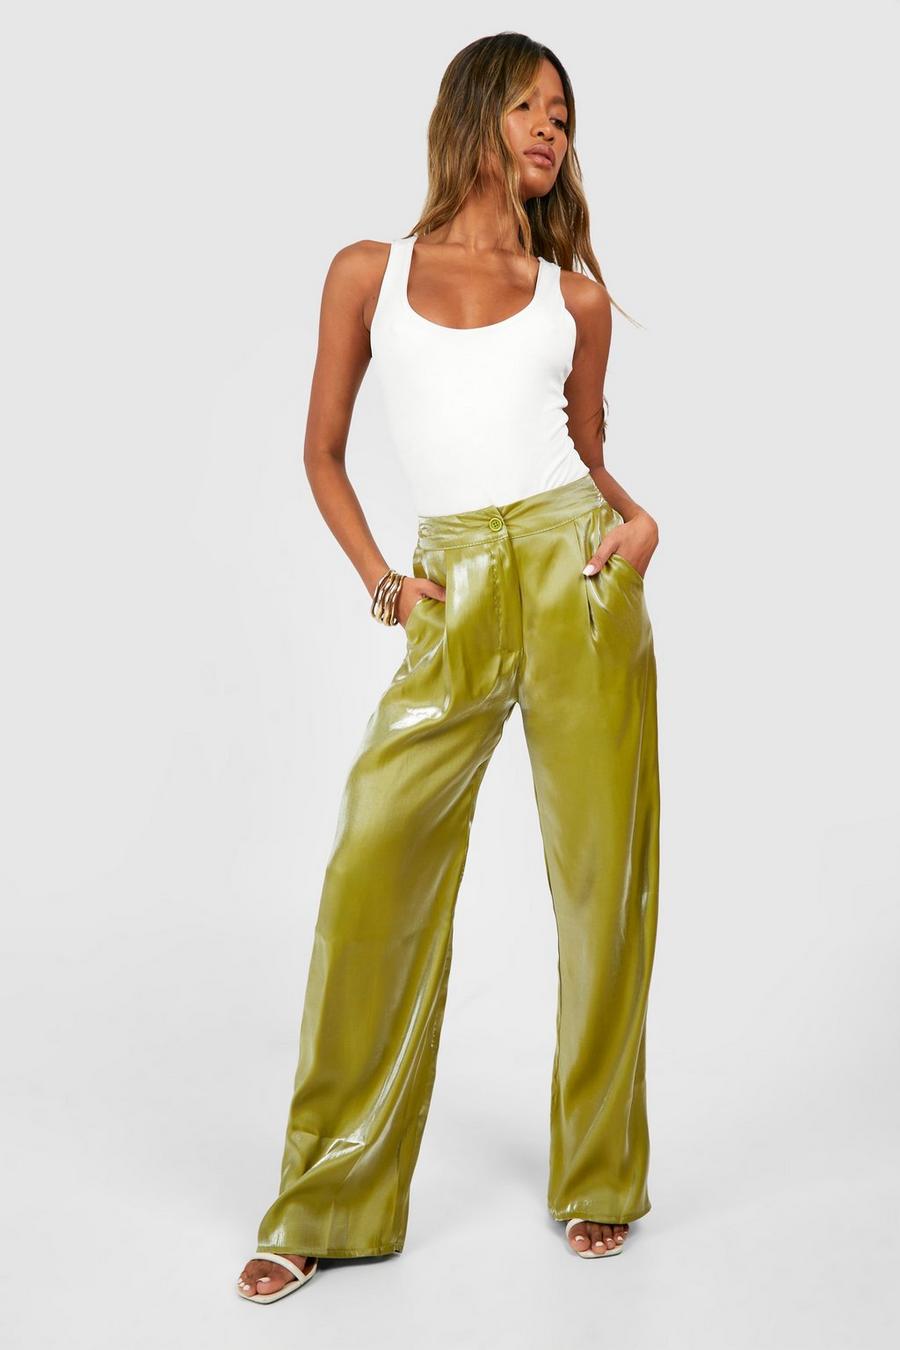 Olive Woven Shimmer Pants